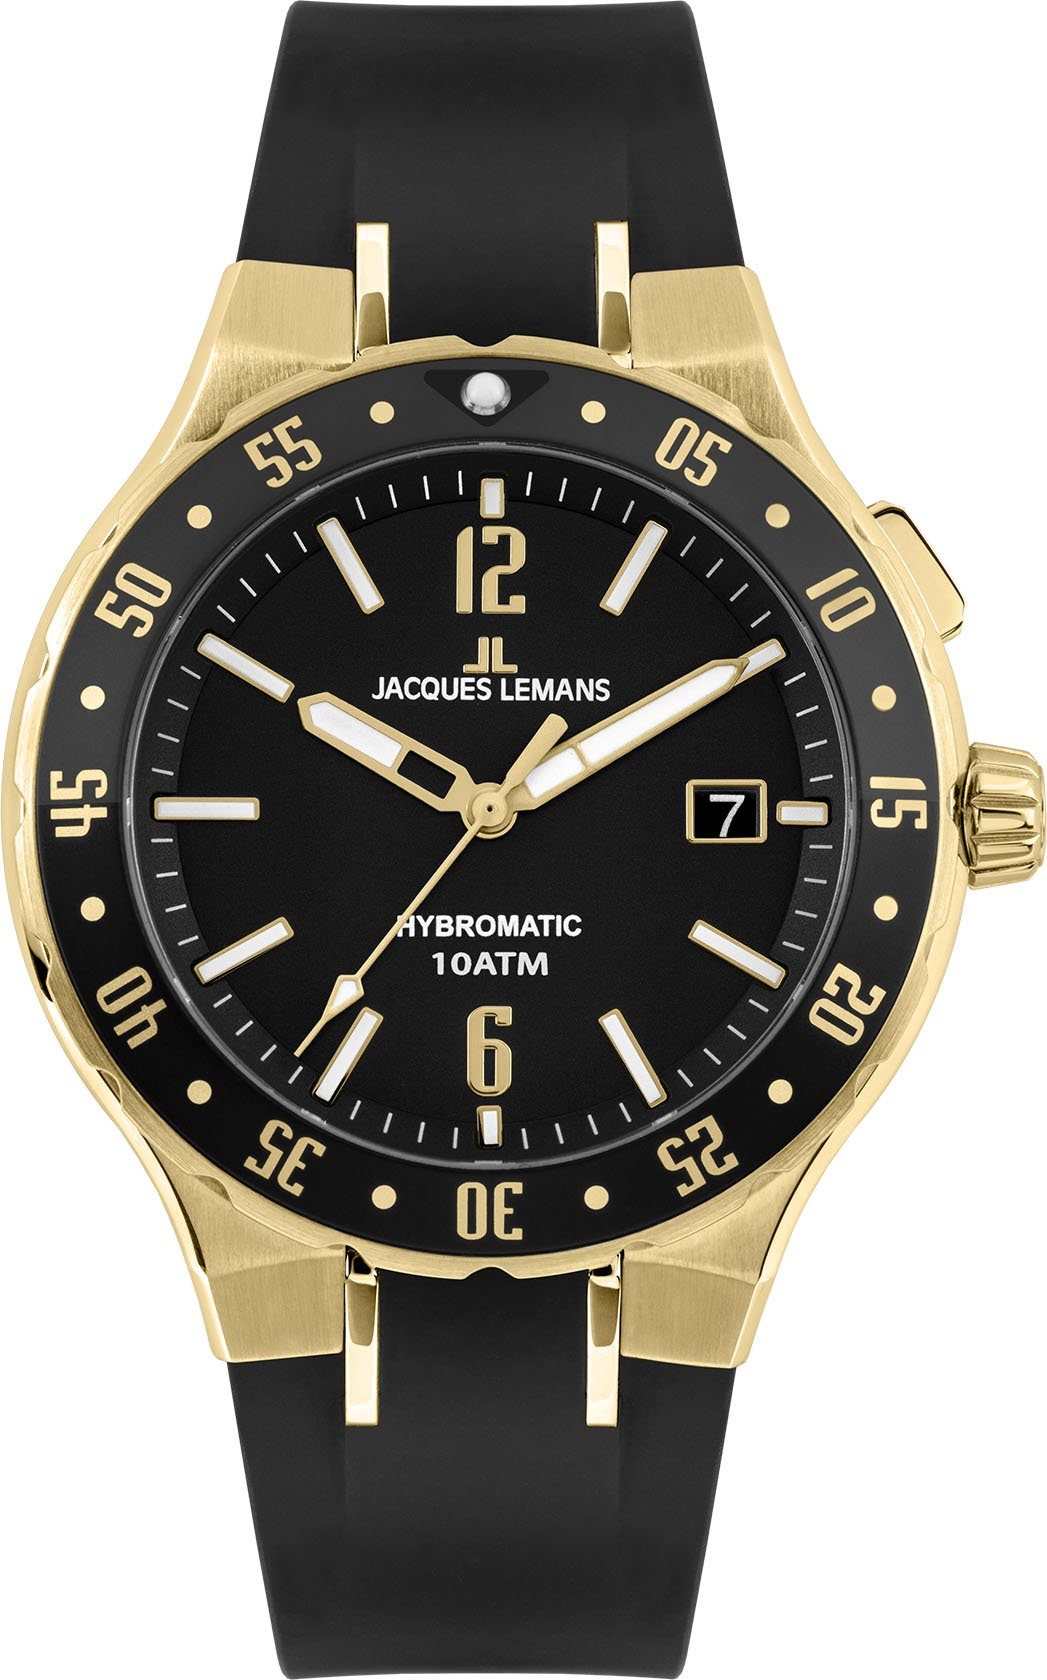 Jacques Lemans Kineticuhr Hybromatic, 1-2109E gold, schwarz | Armbanduhren